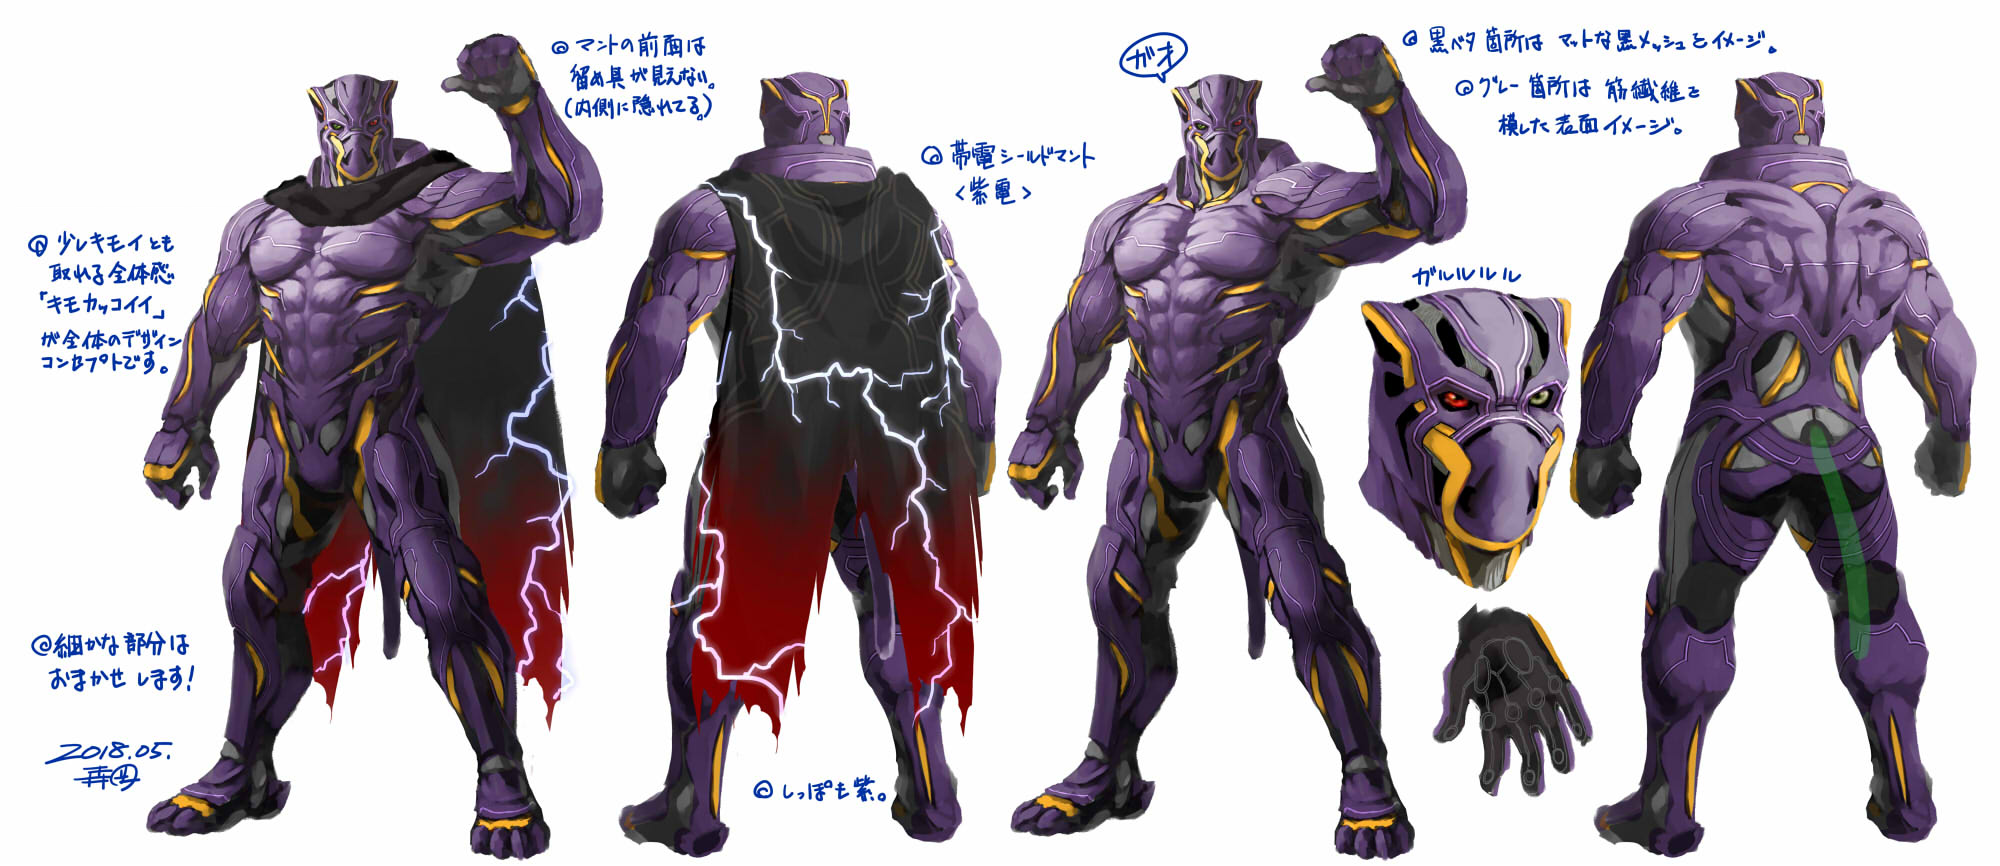 Tekken 7 Concept Art Gallery Alternate Costumes